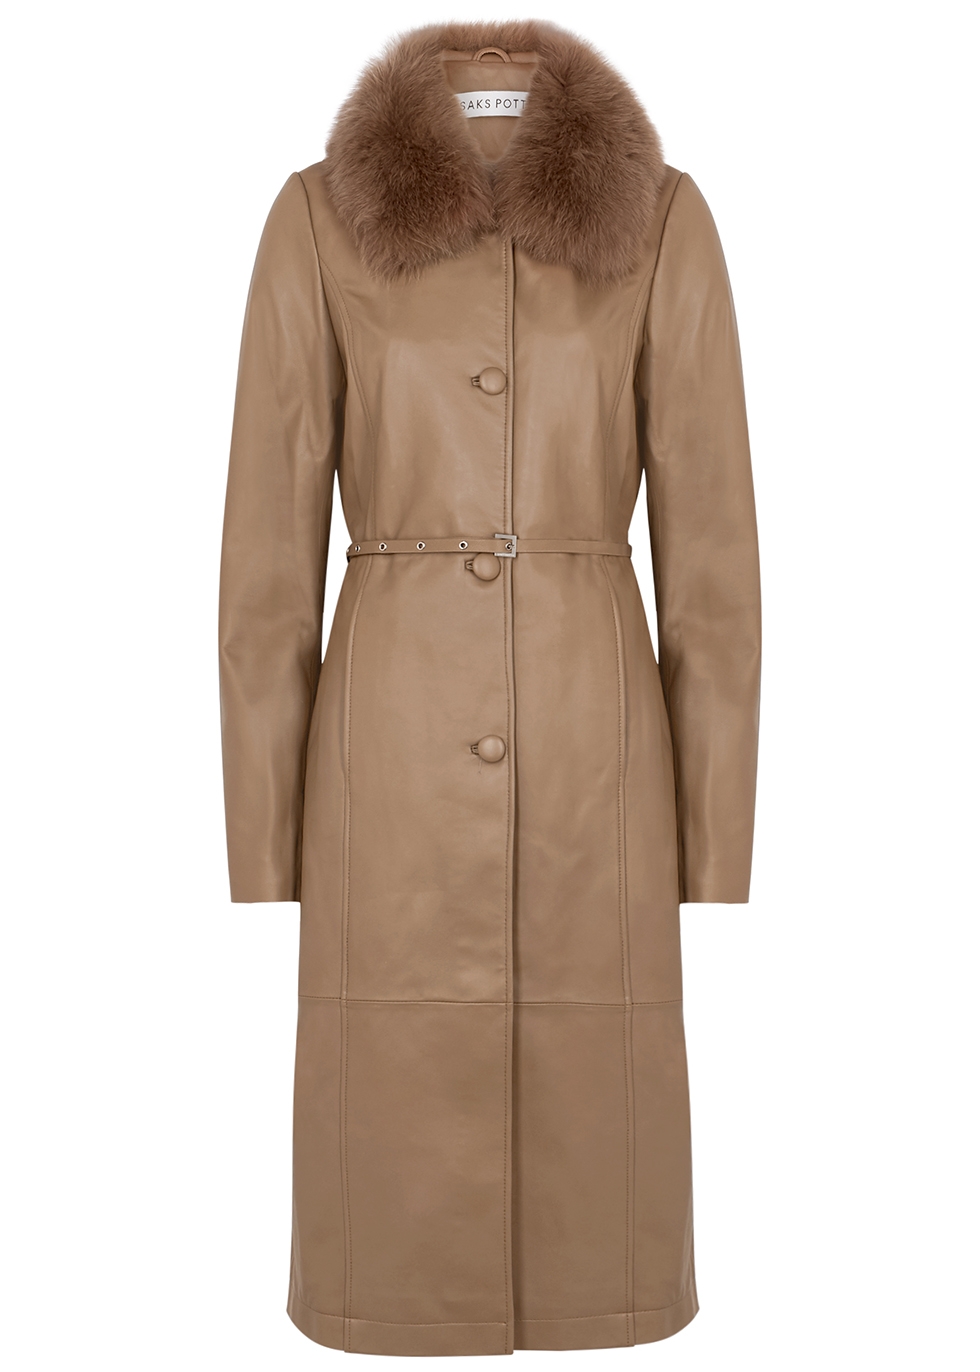 Charlot brown fur-trimmed leather coat